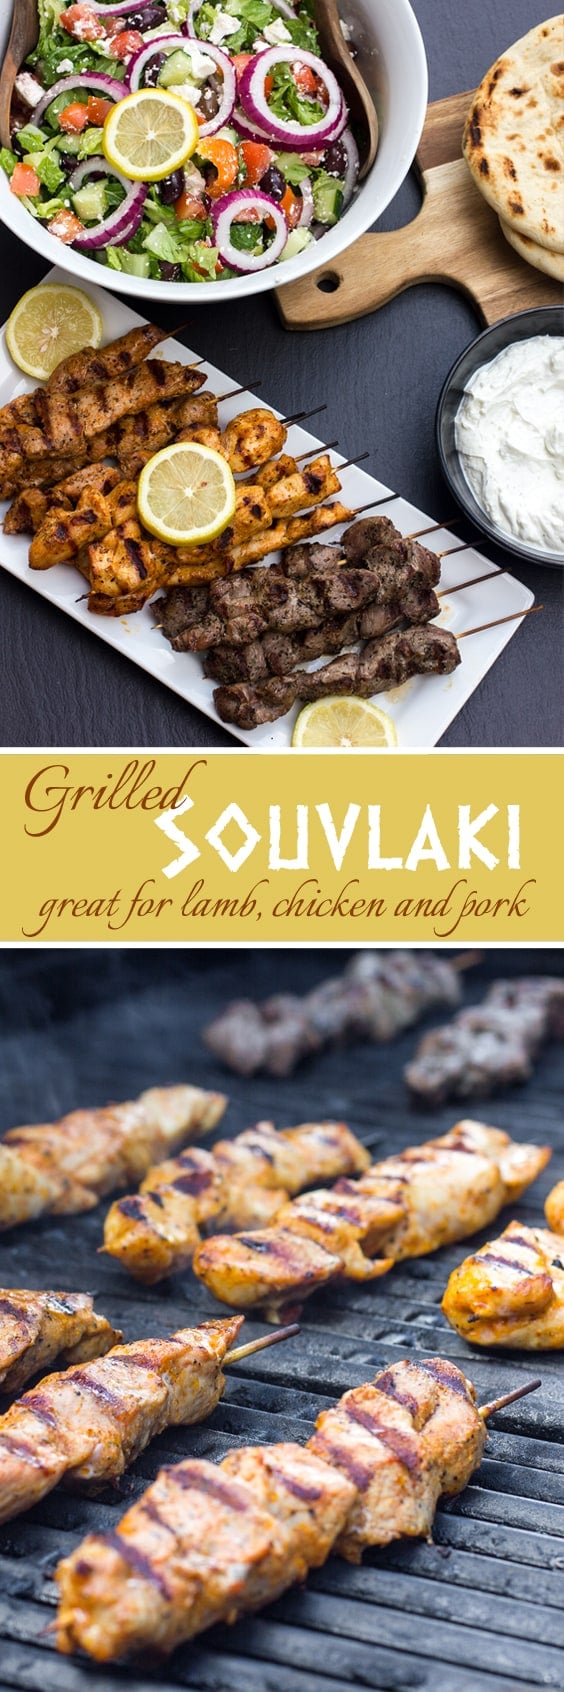 Grilled Greek Souvlaki lamb chicken pork